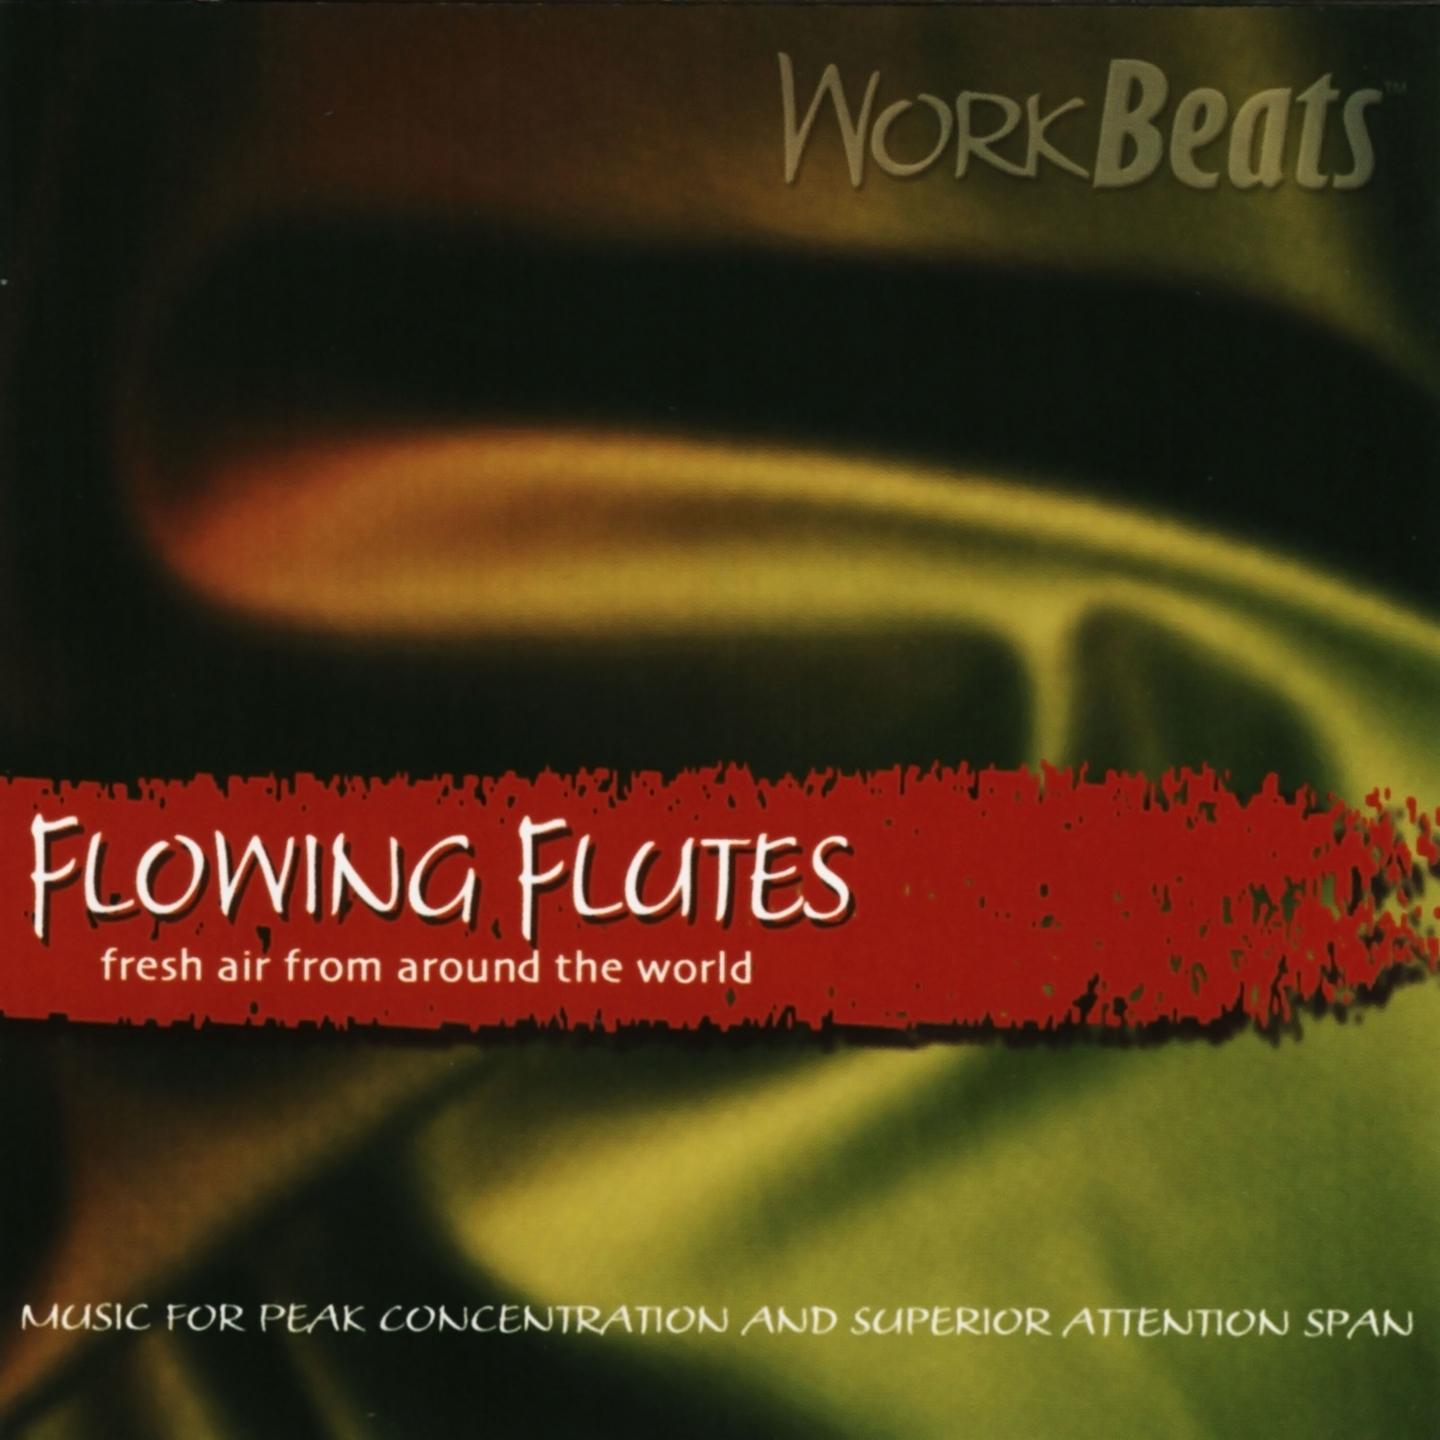 Flowing Flutes